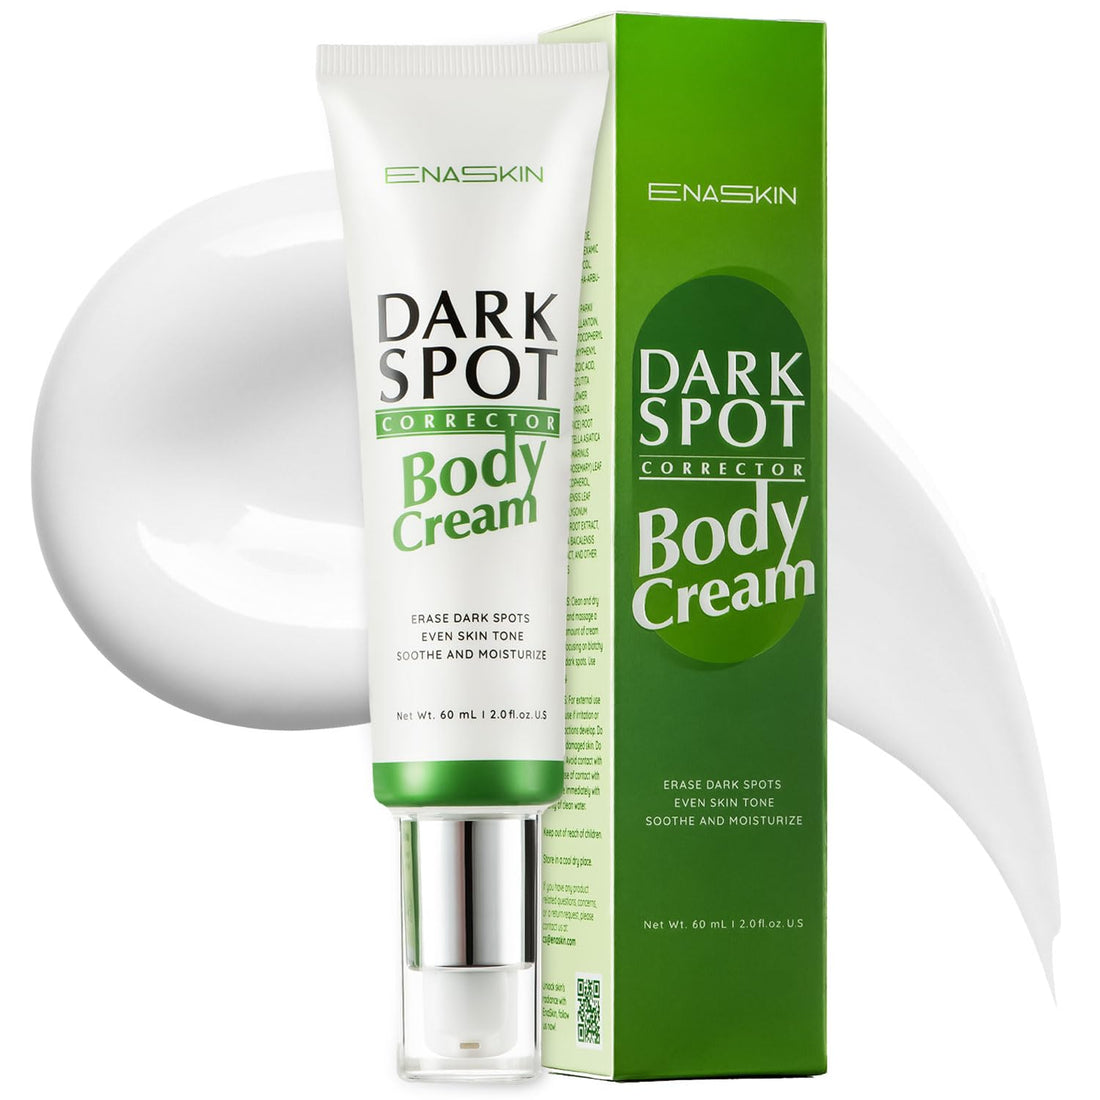 Dark Spot Corrector Body Cream